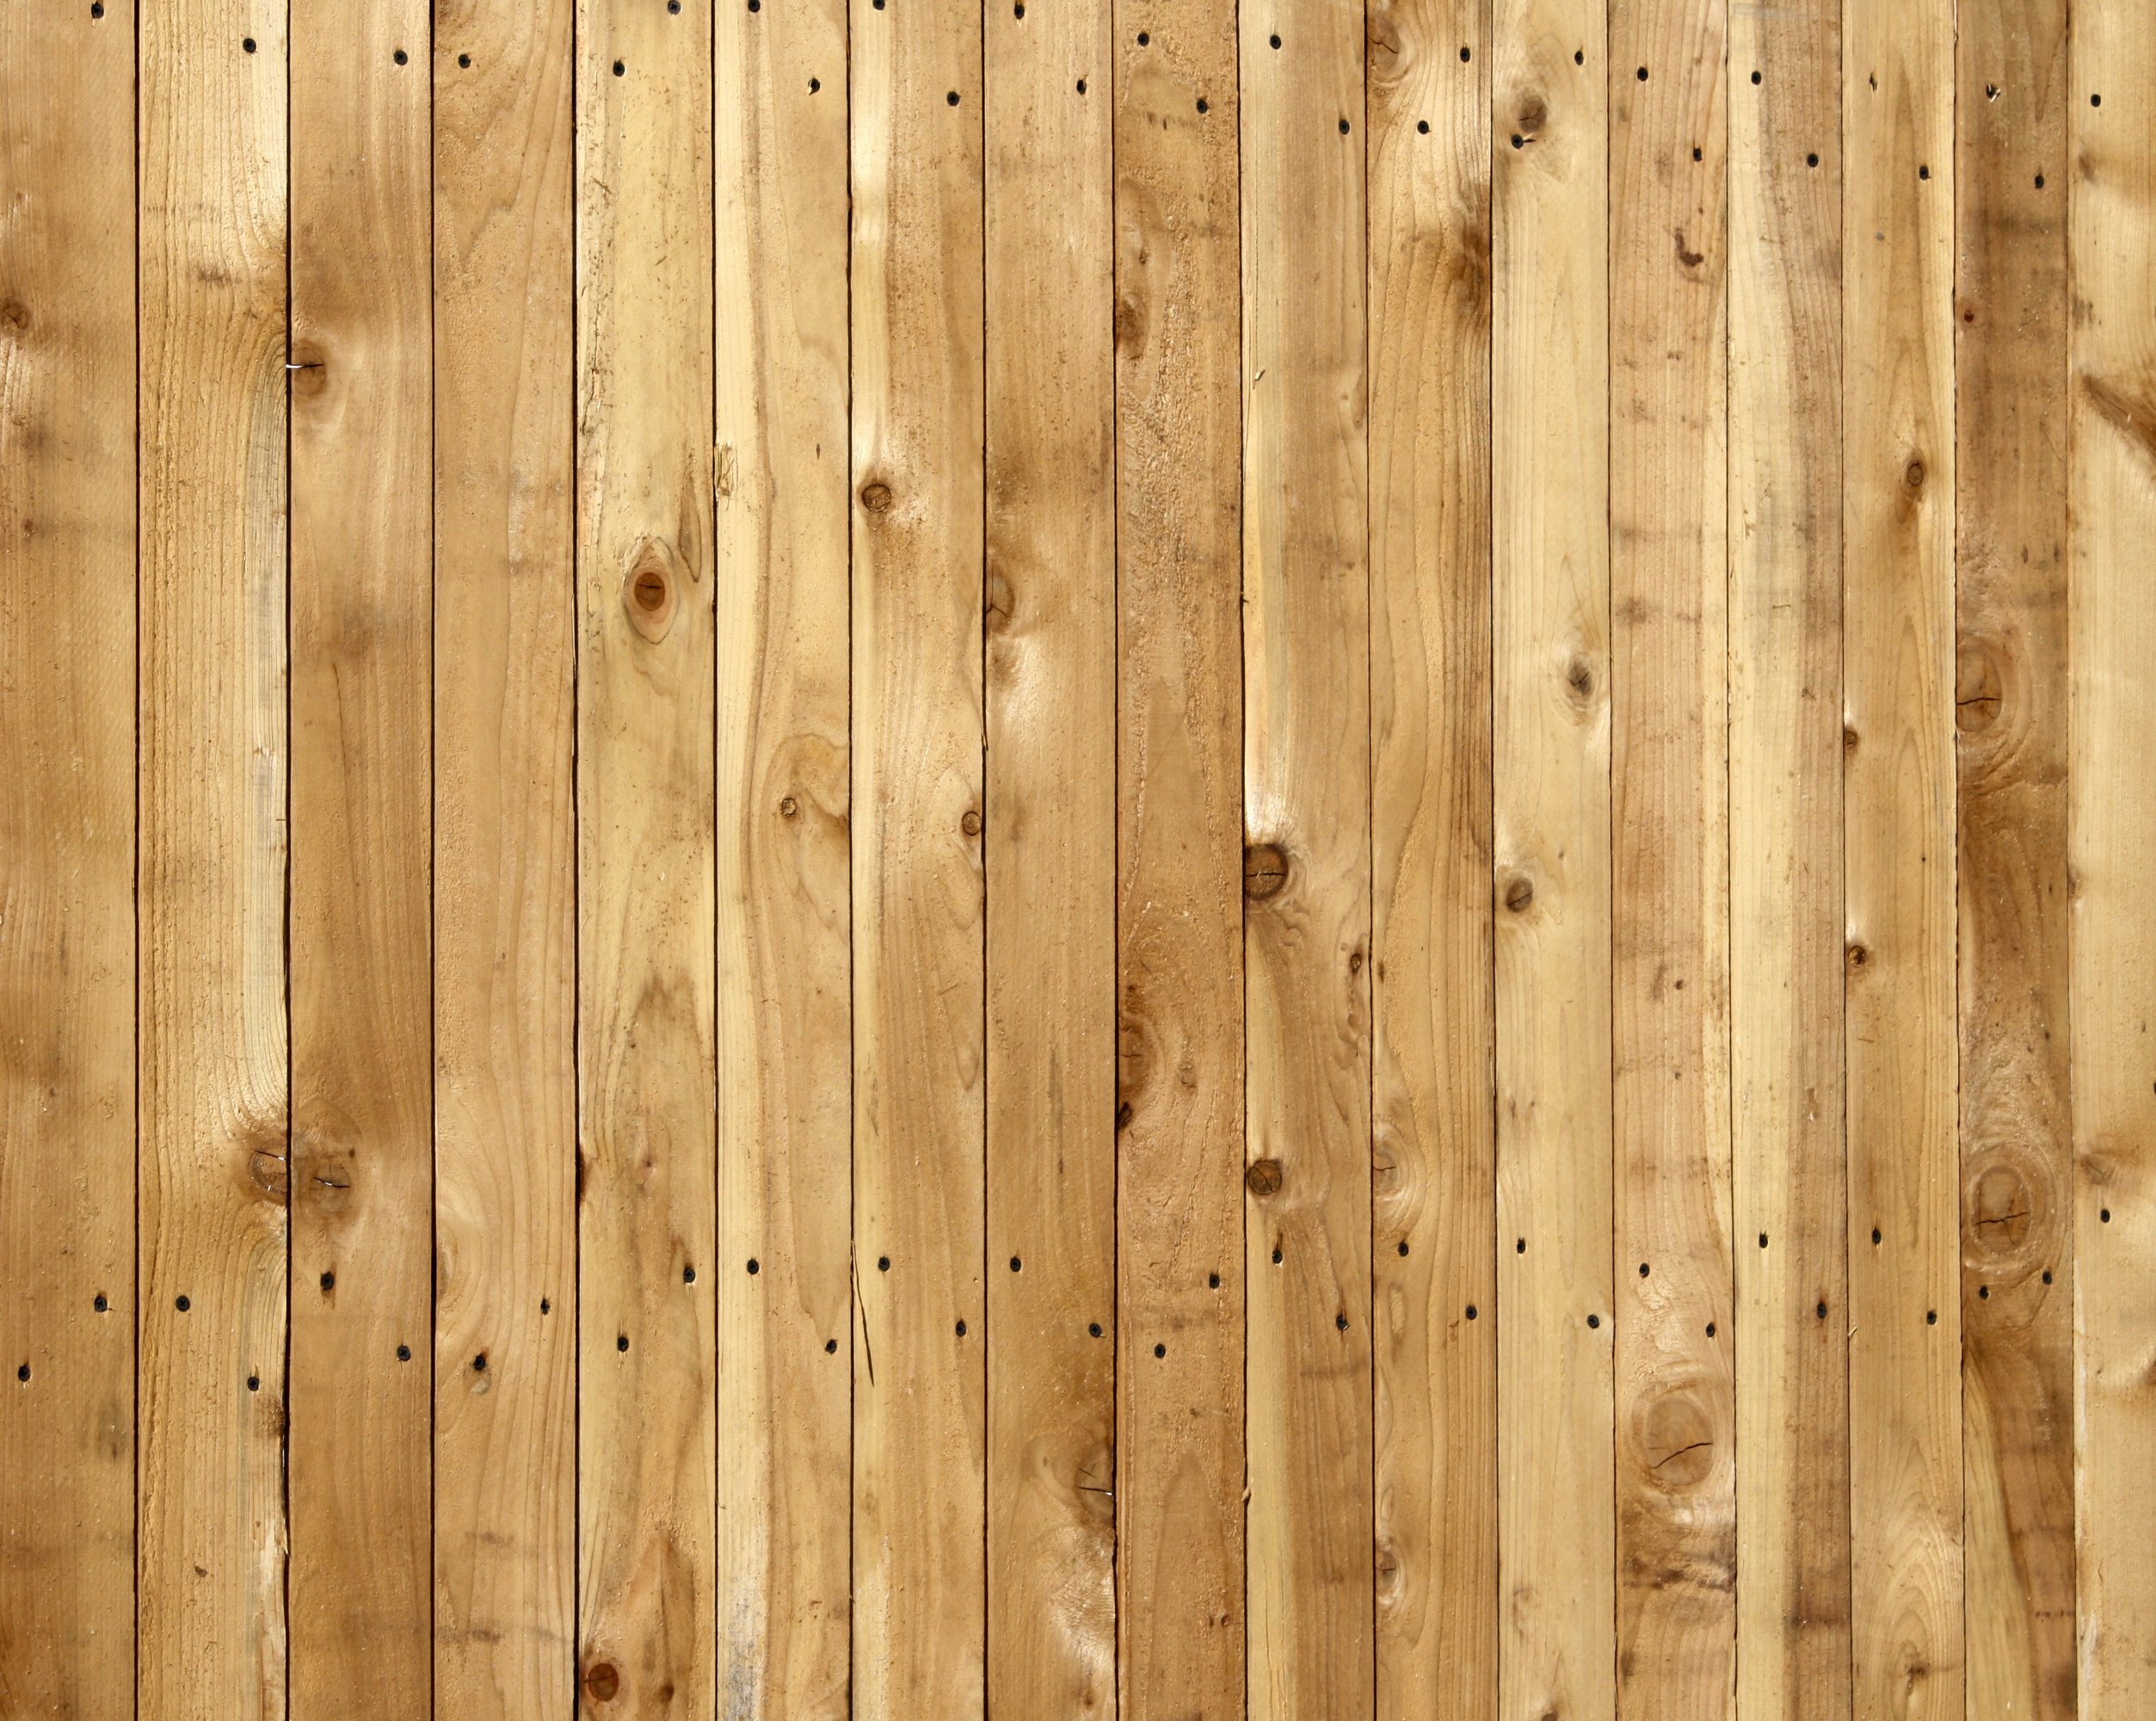 Wooden Fence Texture Closeup Picture | Free Photograph | Photos Public